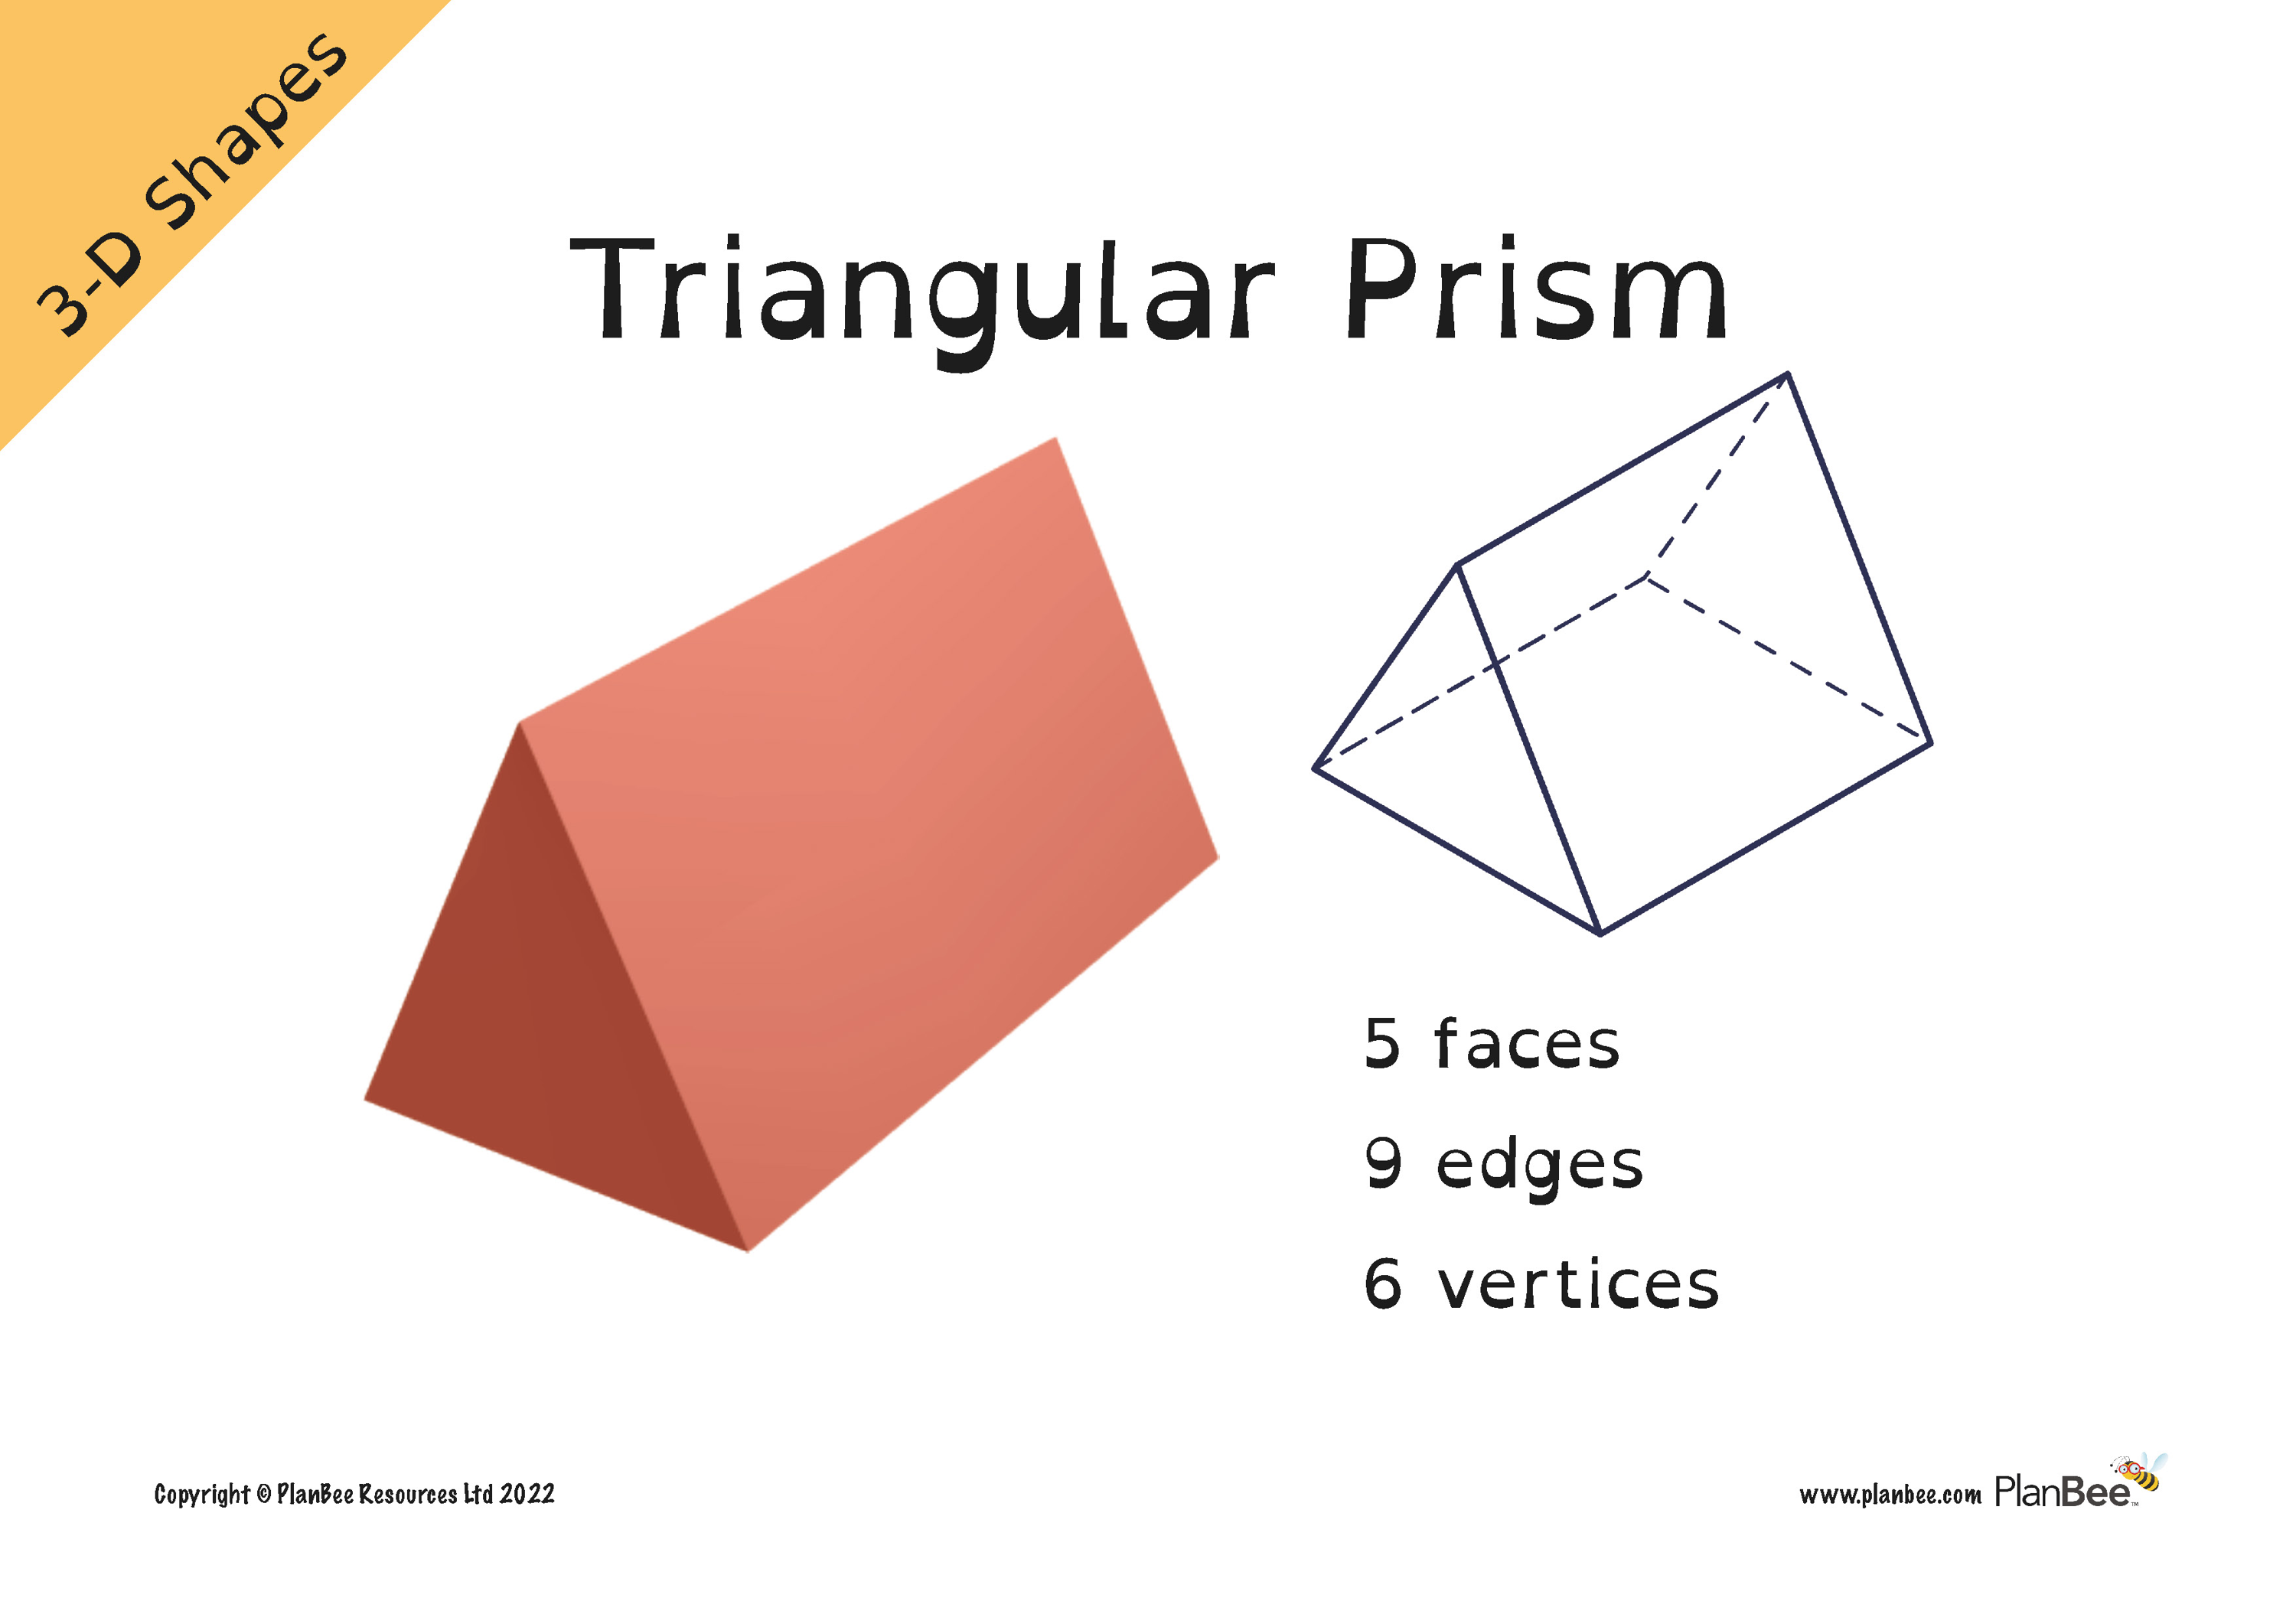 Properties of a triangular prism